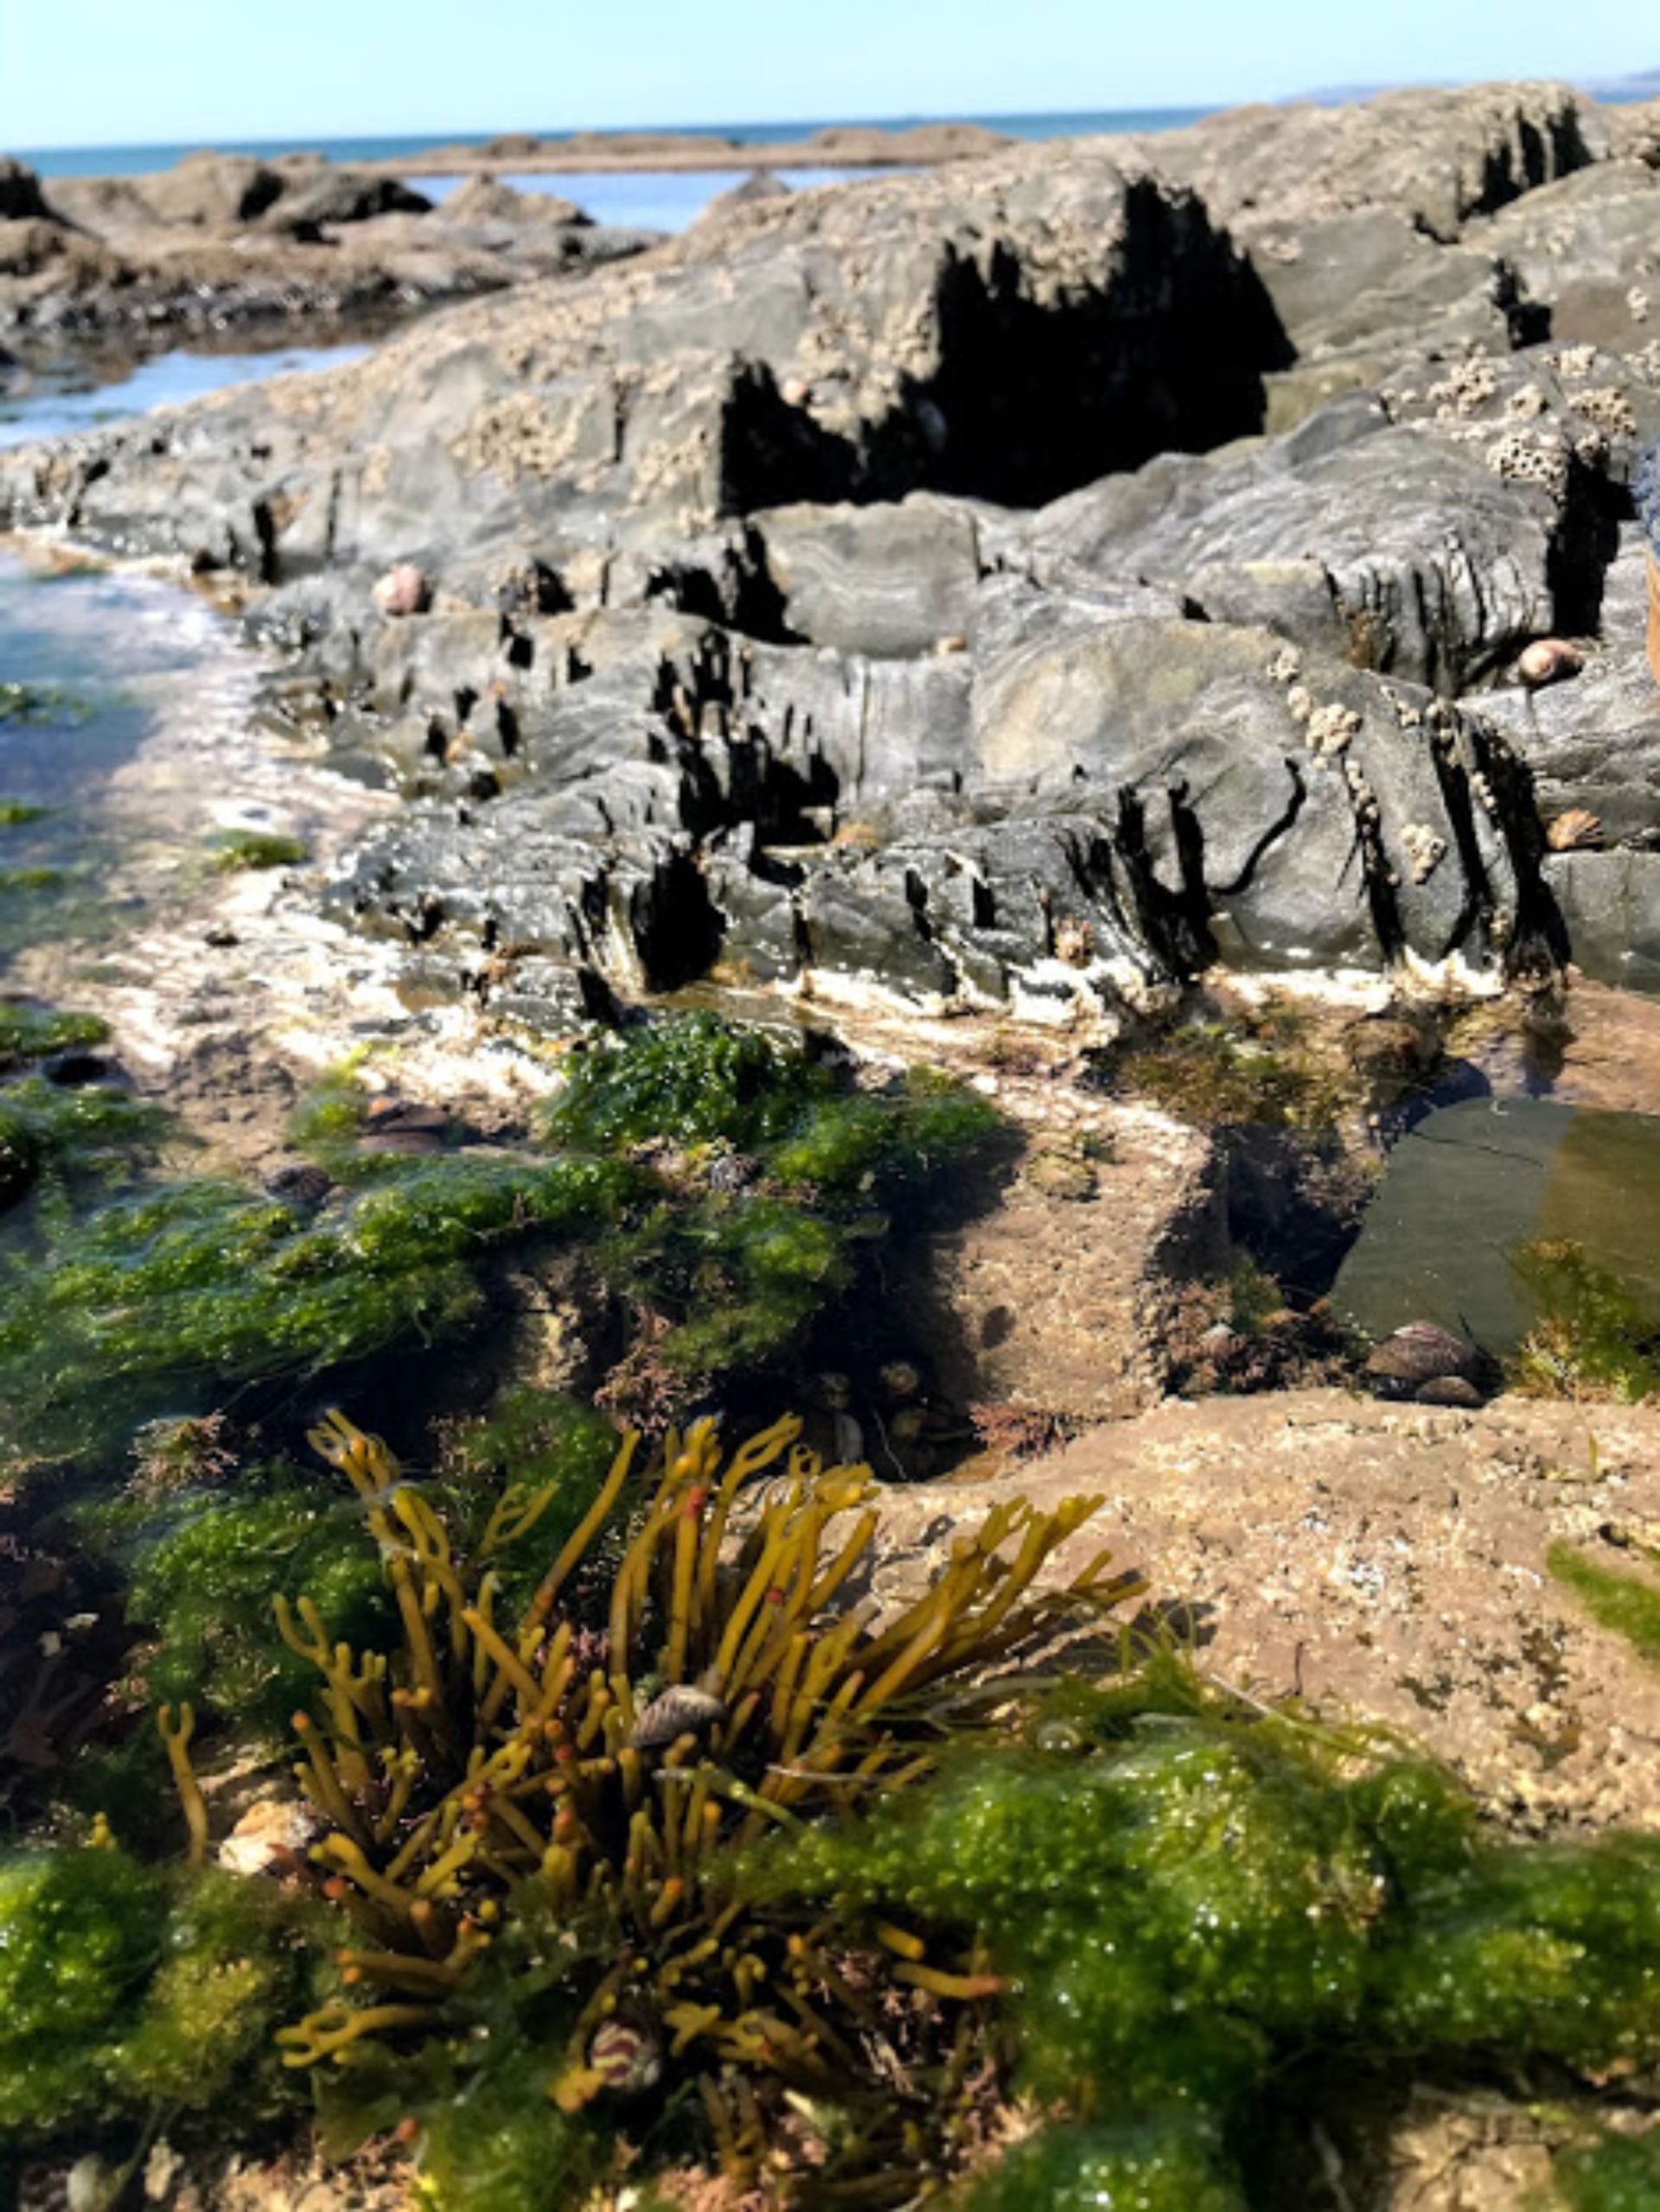 rock pools in Westward Ho! Devon are fully of life